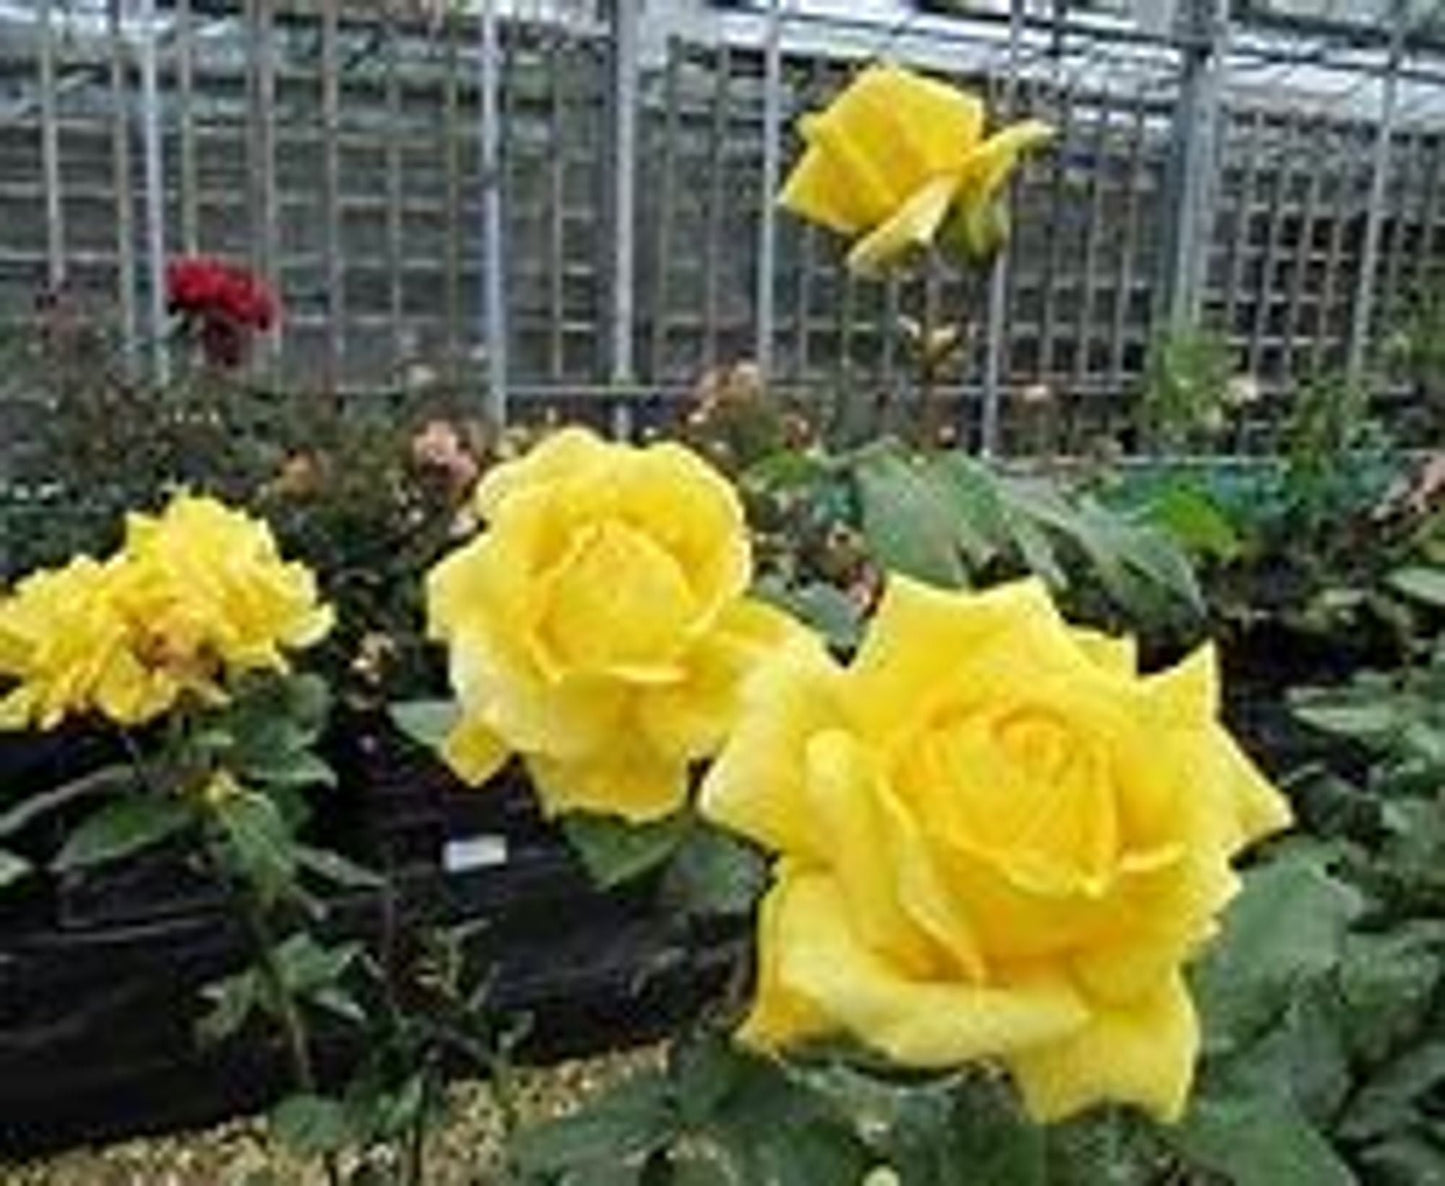 Rose Plant - Hybrid Tea - 'Sunblest' - 1 x Full Plant in 5 Litre Pot - AcquaGarden